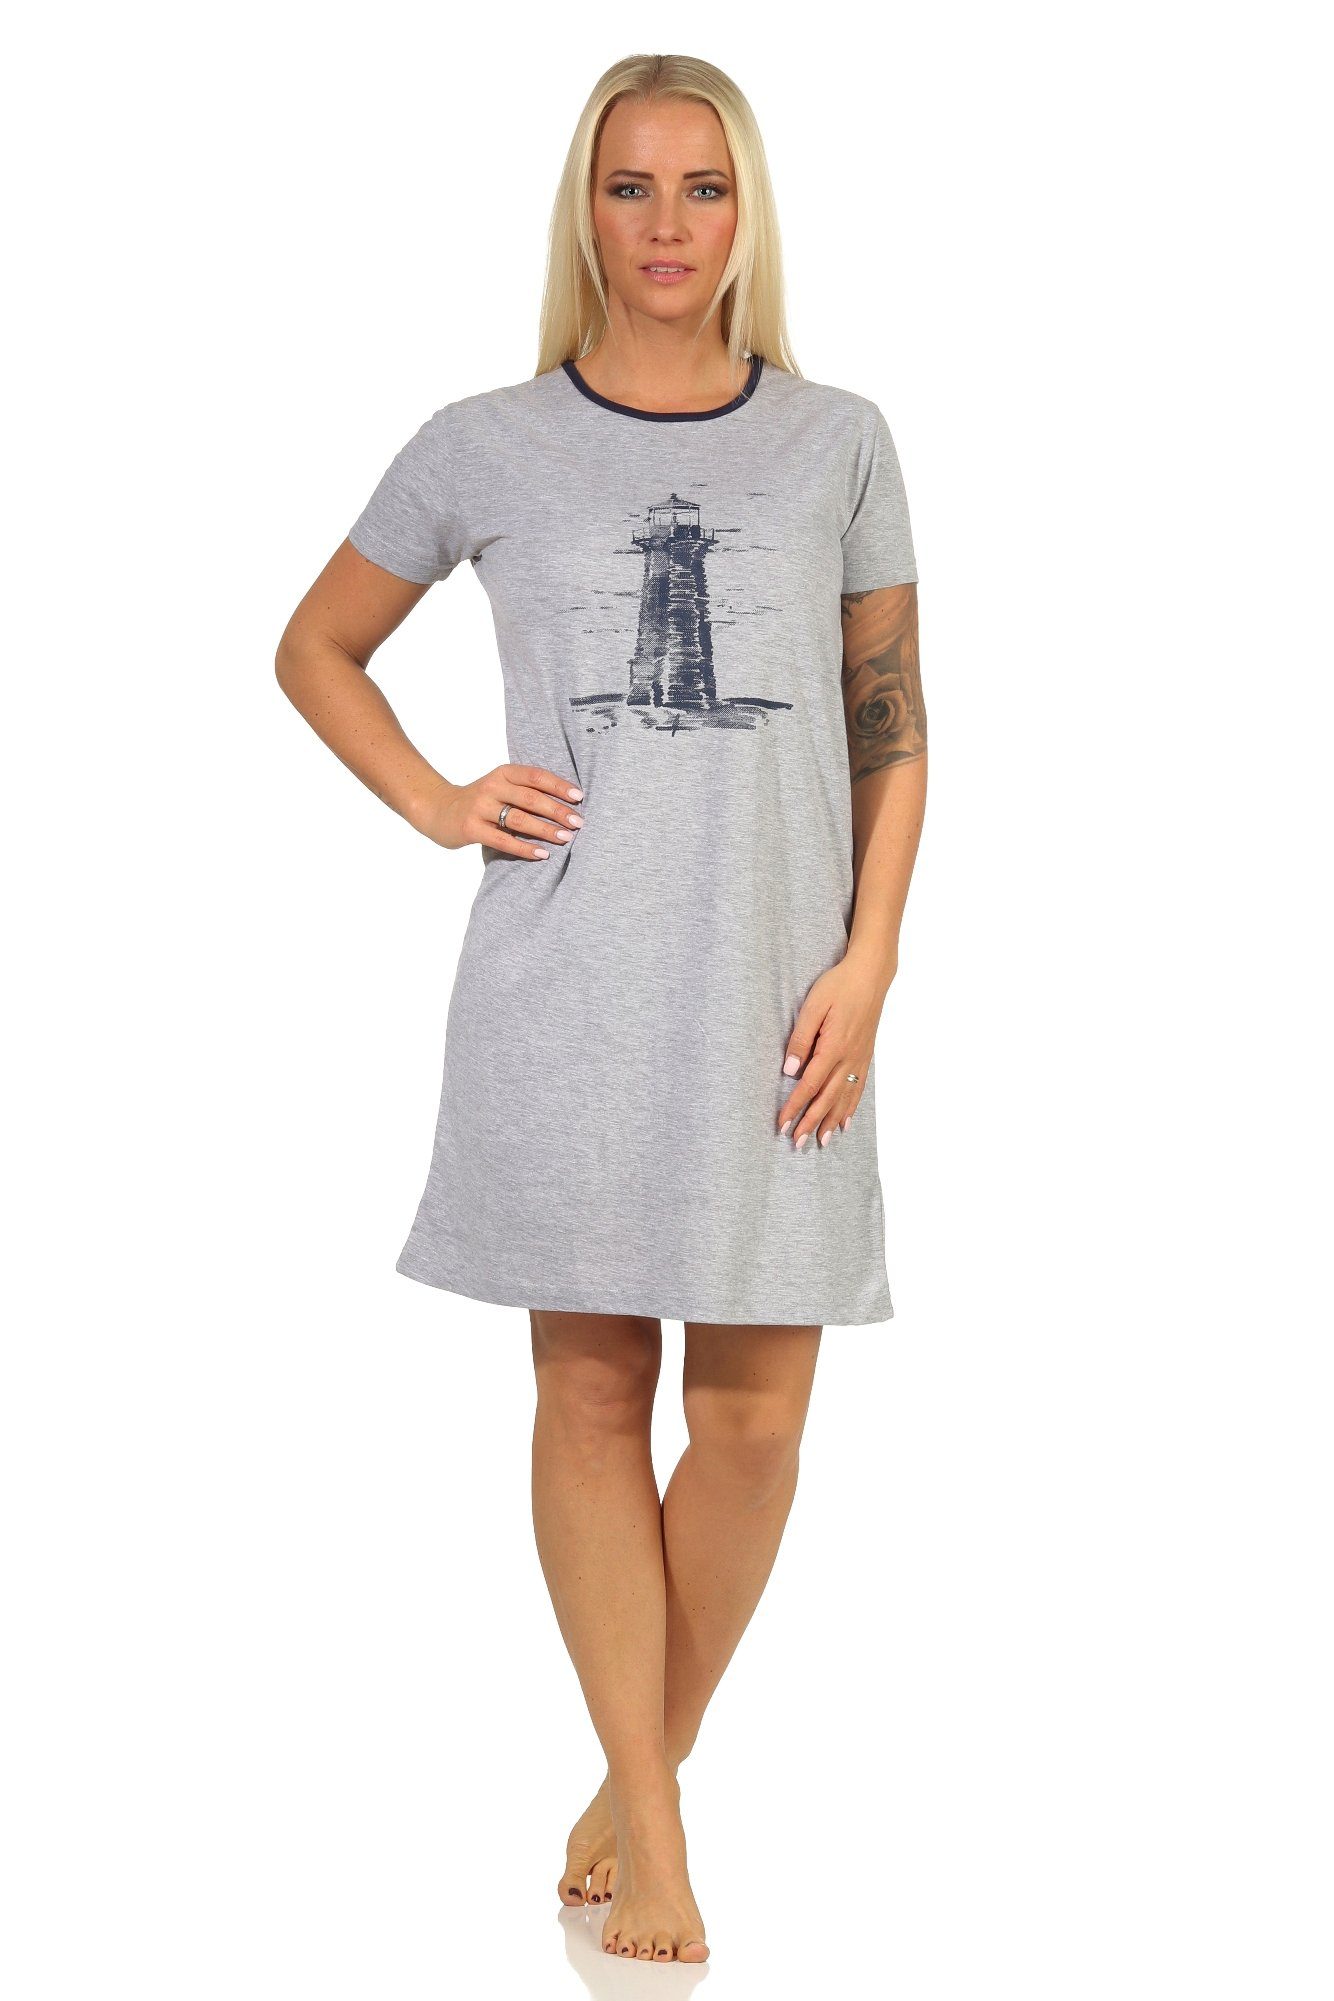 RELAX by Normann Nachthemd Damen im als Leuchtturm kurzarm Nachthemd und maritimen Motiv grau Look